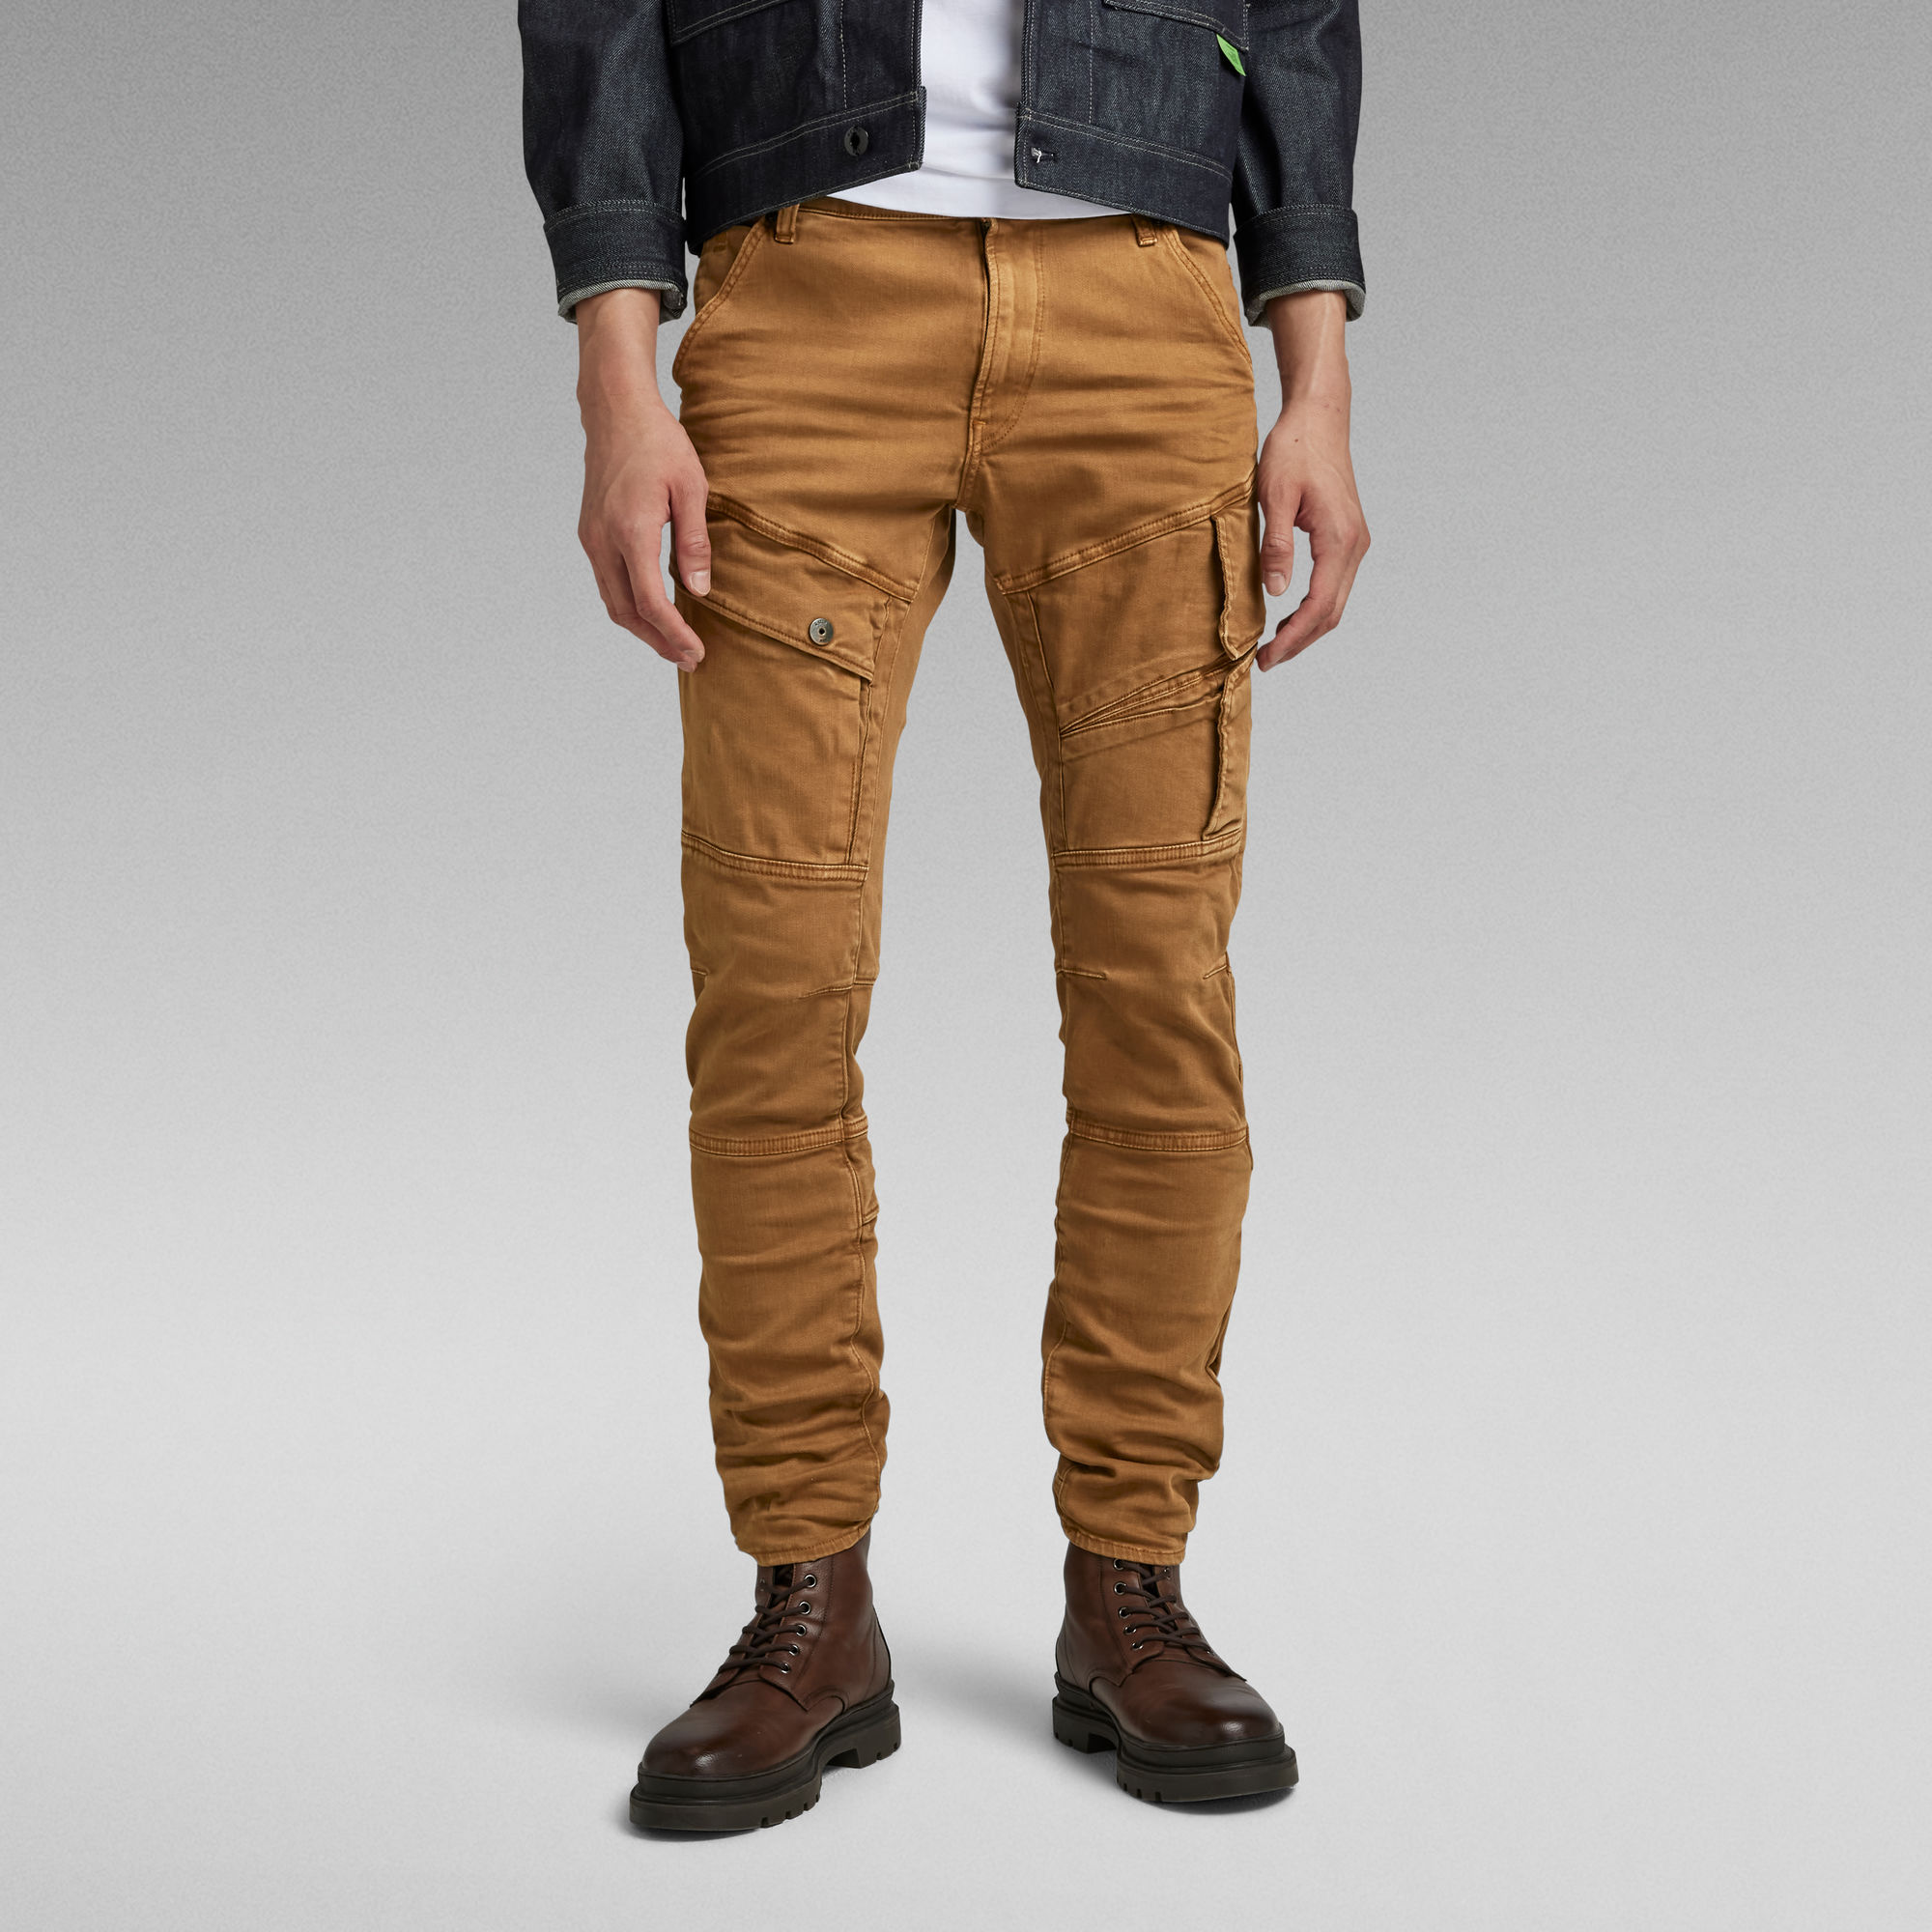 Airblaze 3d Skinny Jeans Brown G Star Raw®